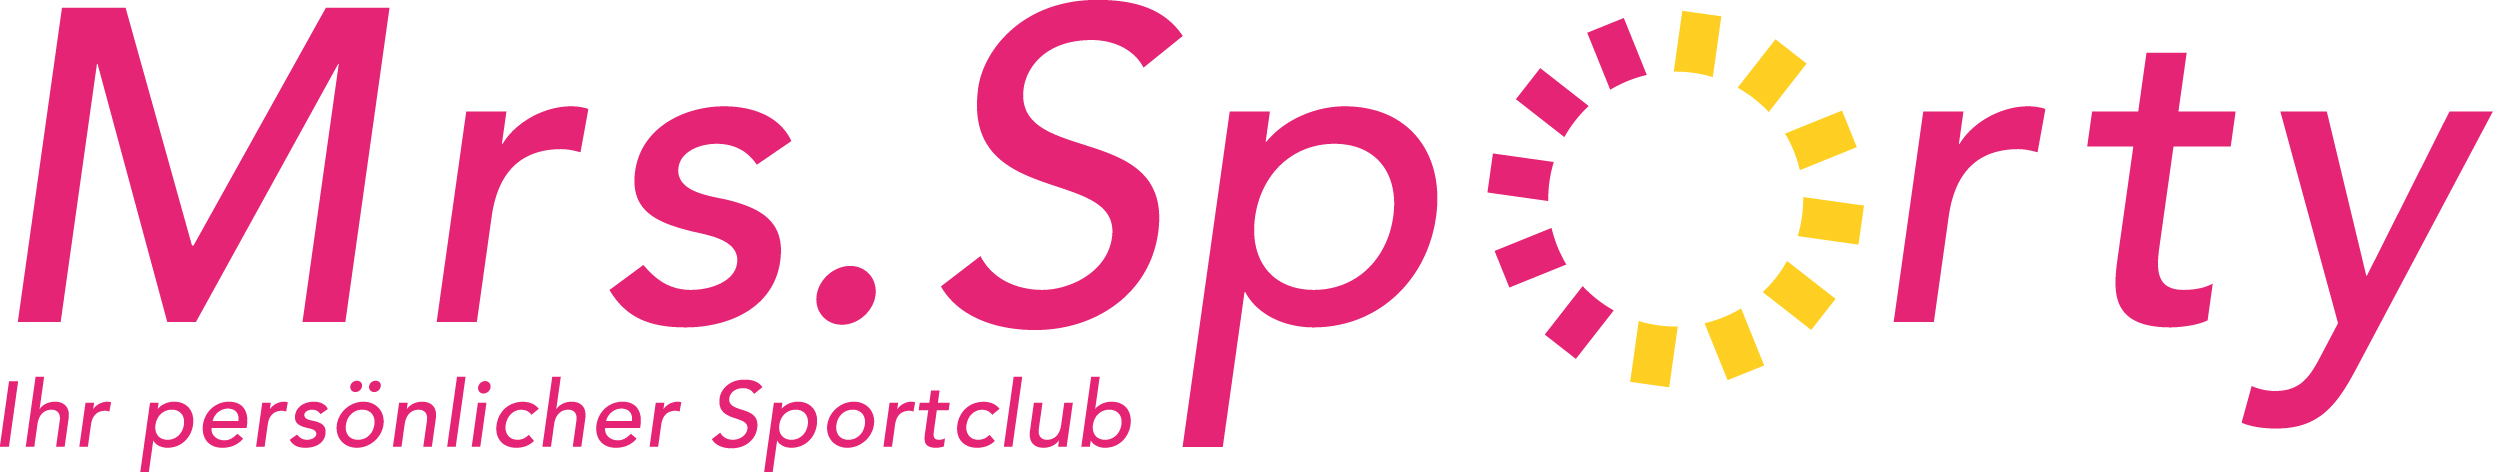 MrsSporty Logo